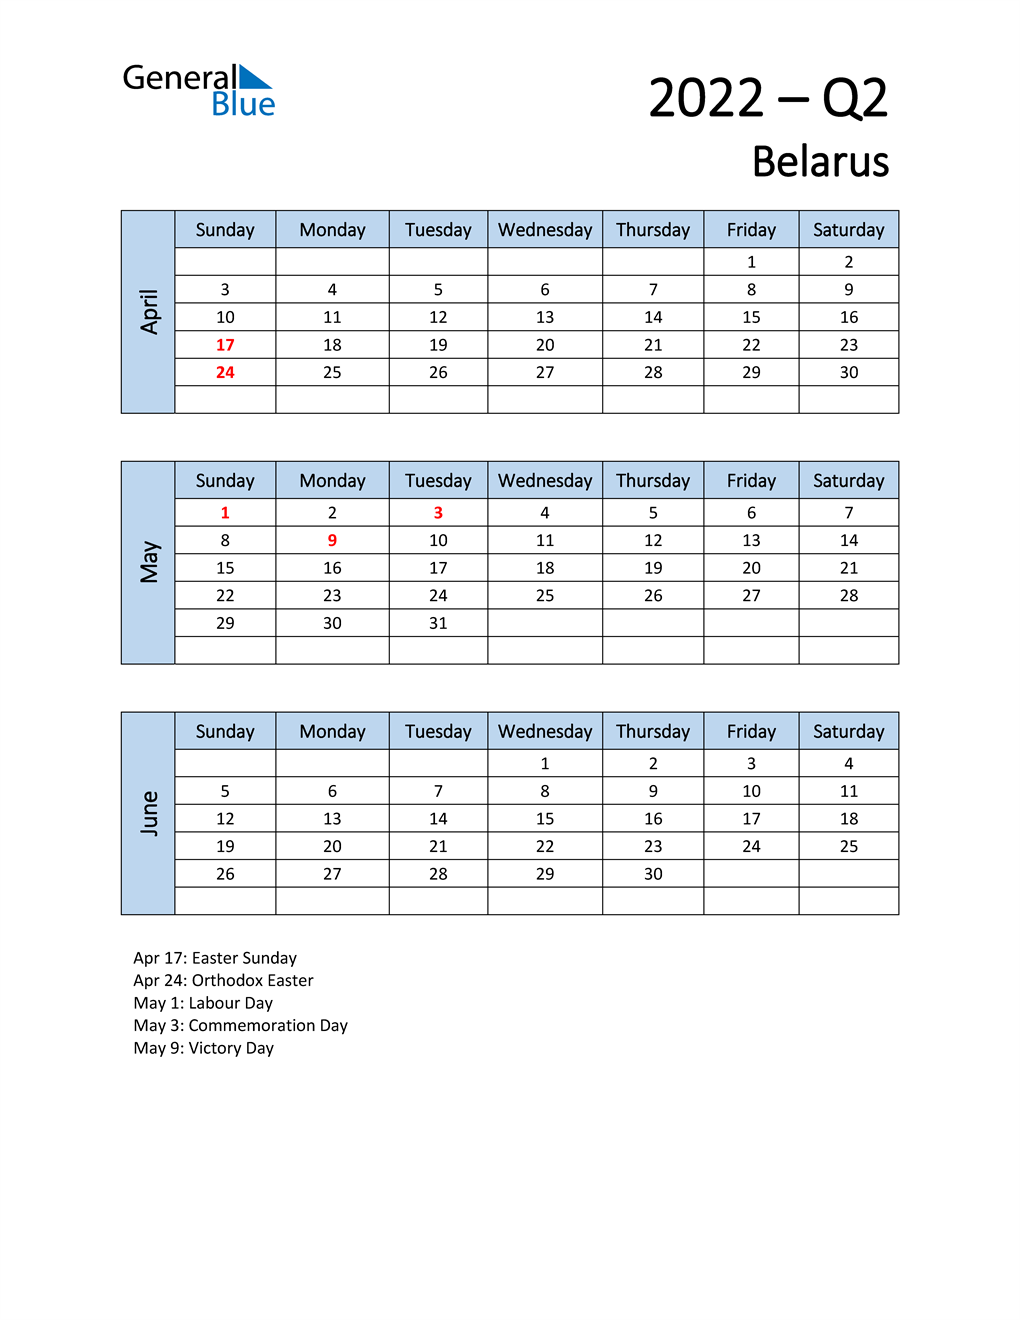  Free Q2 2022 Calendar for Belarus